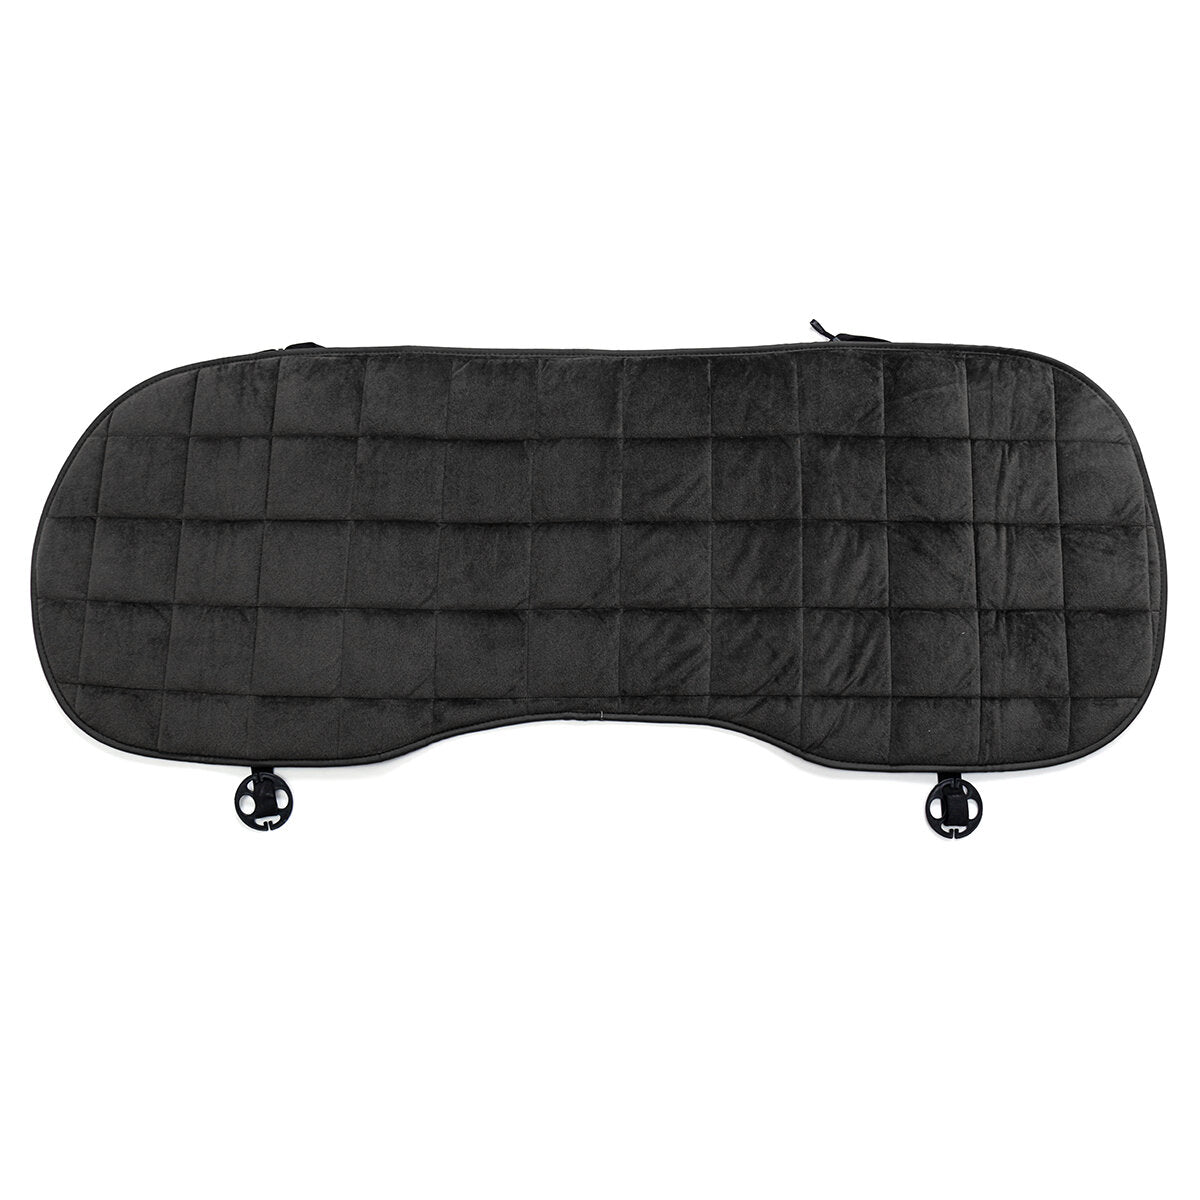 Car Seat Cover Cushion Universal Plush Rear Warm Pad